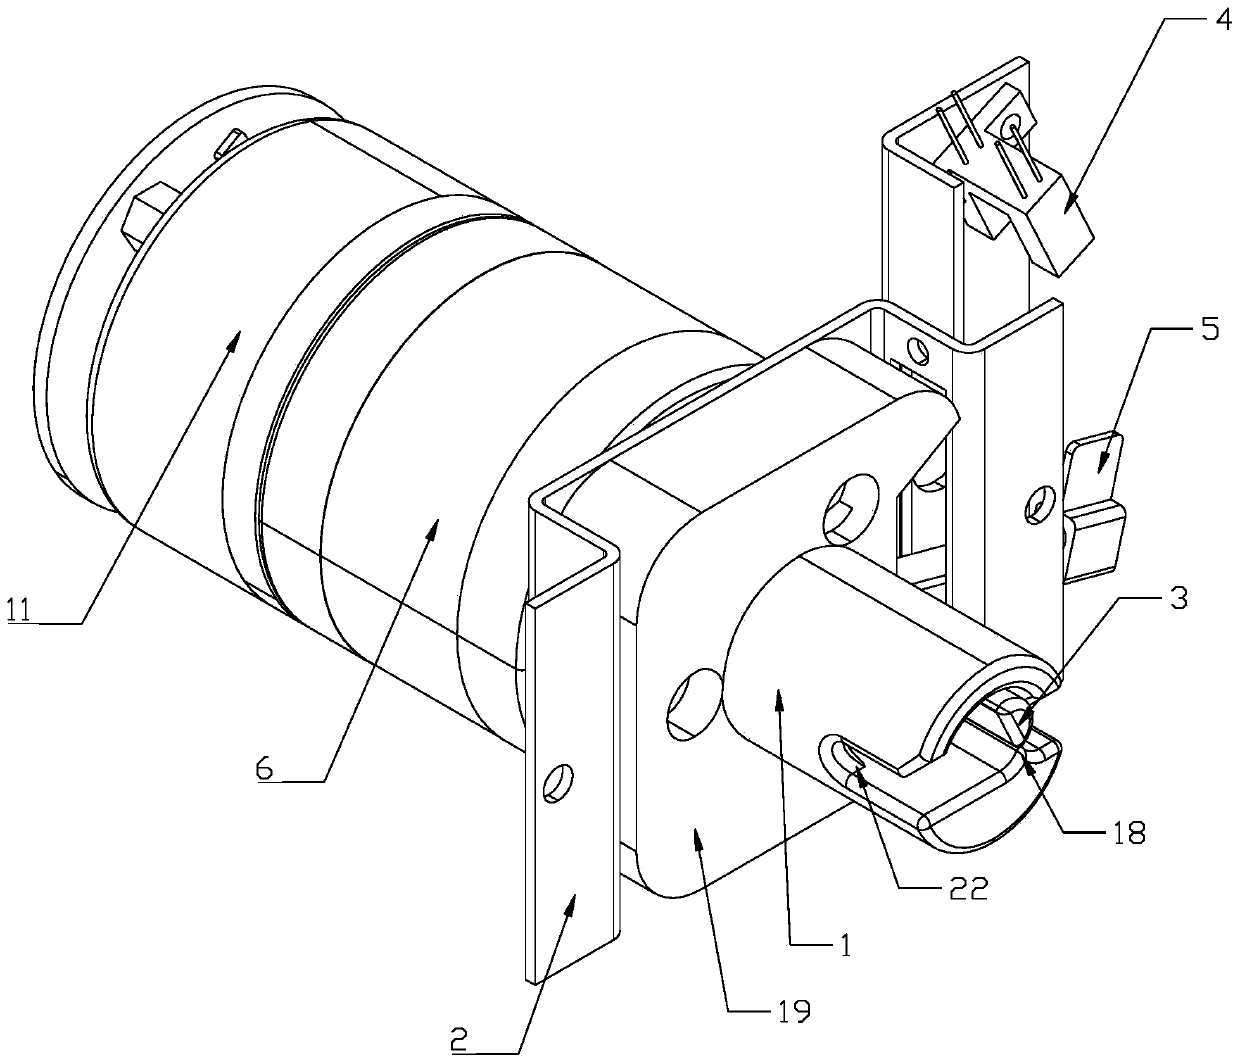 Novel planar spring pinch valve device